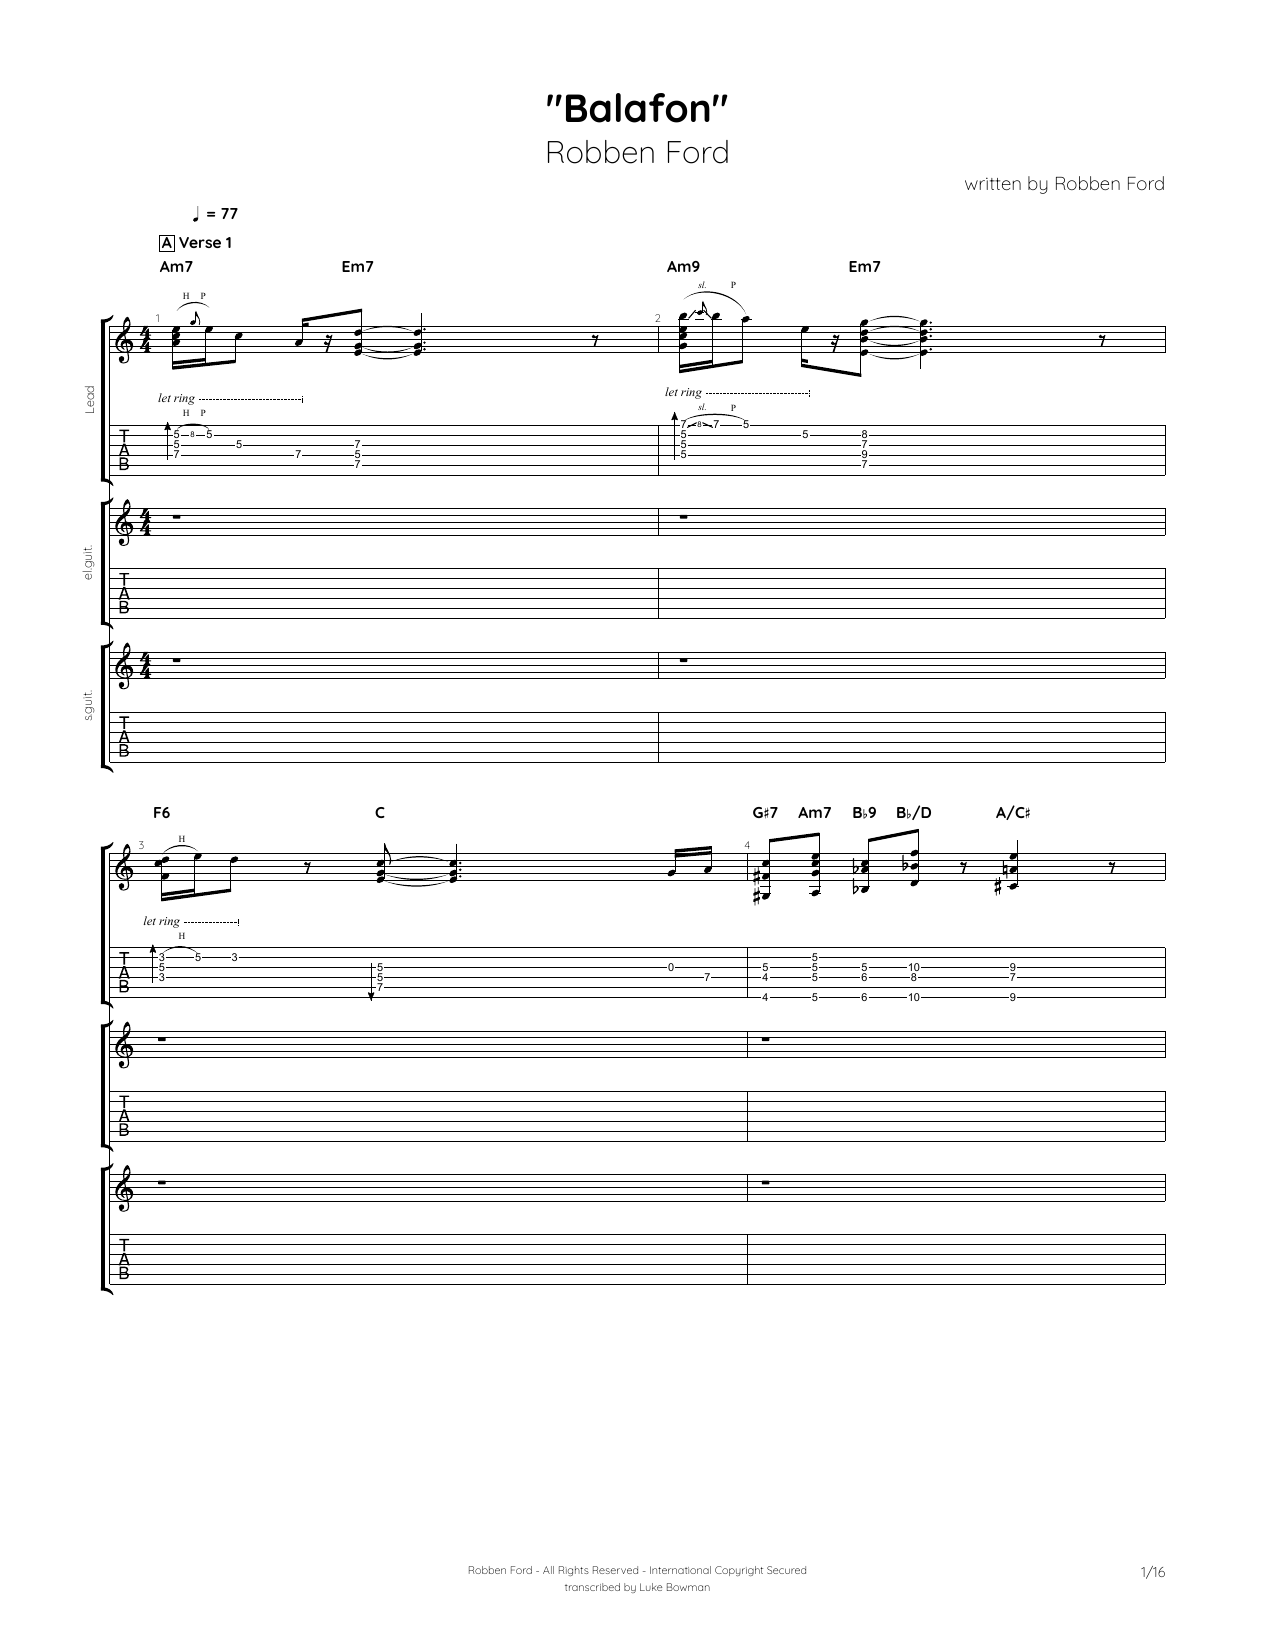 Robben Ford Balafon Sheet Music Notes & Chords for Guitar Tab - Download or Print PDF